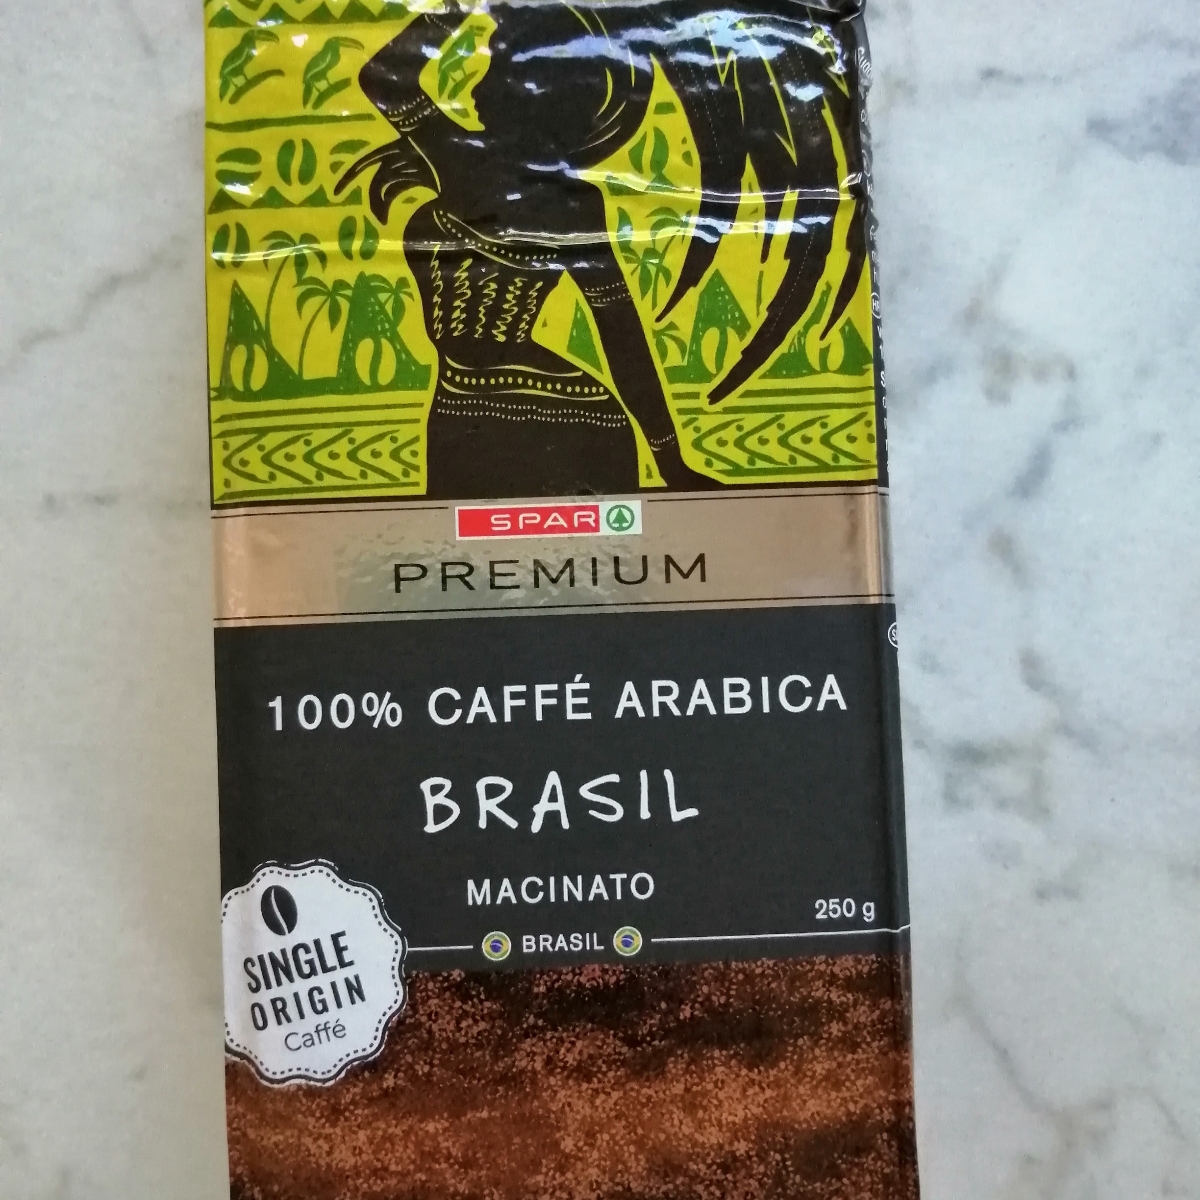 Despar premium Caffè 100% arabica brasil Review | abillion